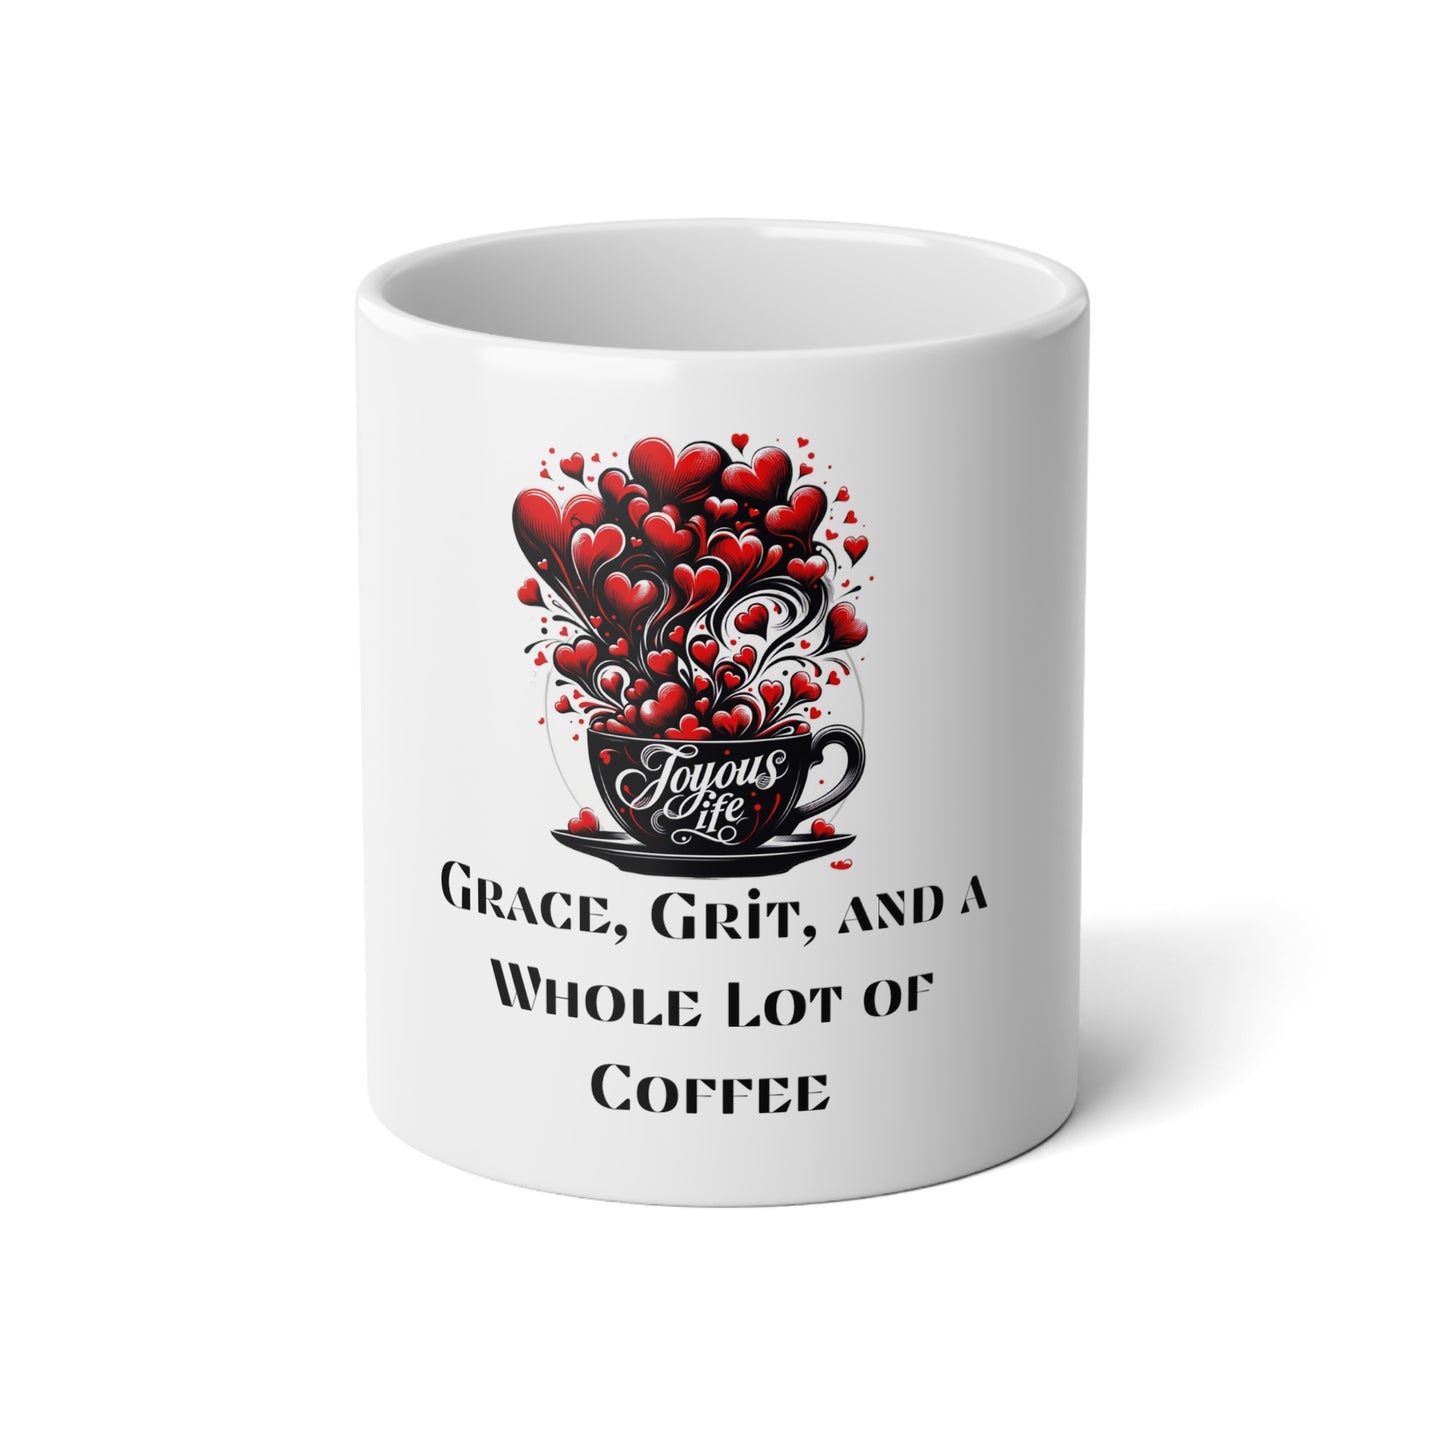 Grace & Grit Coffee Power Mug, Joyous Life Journals